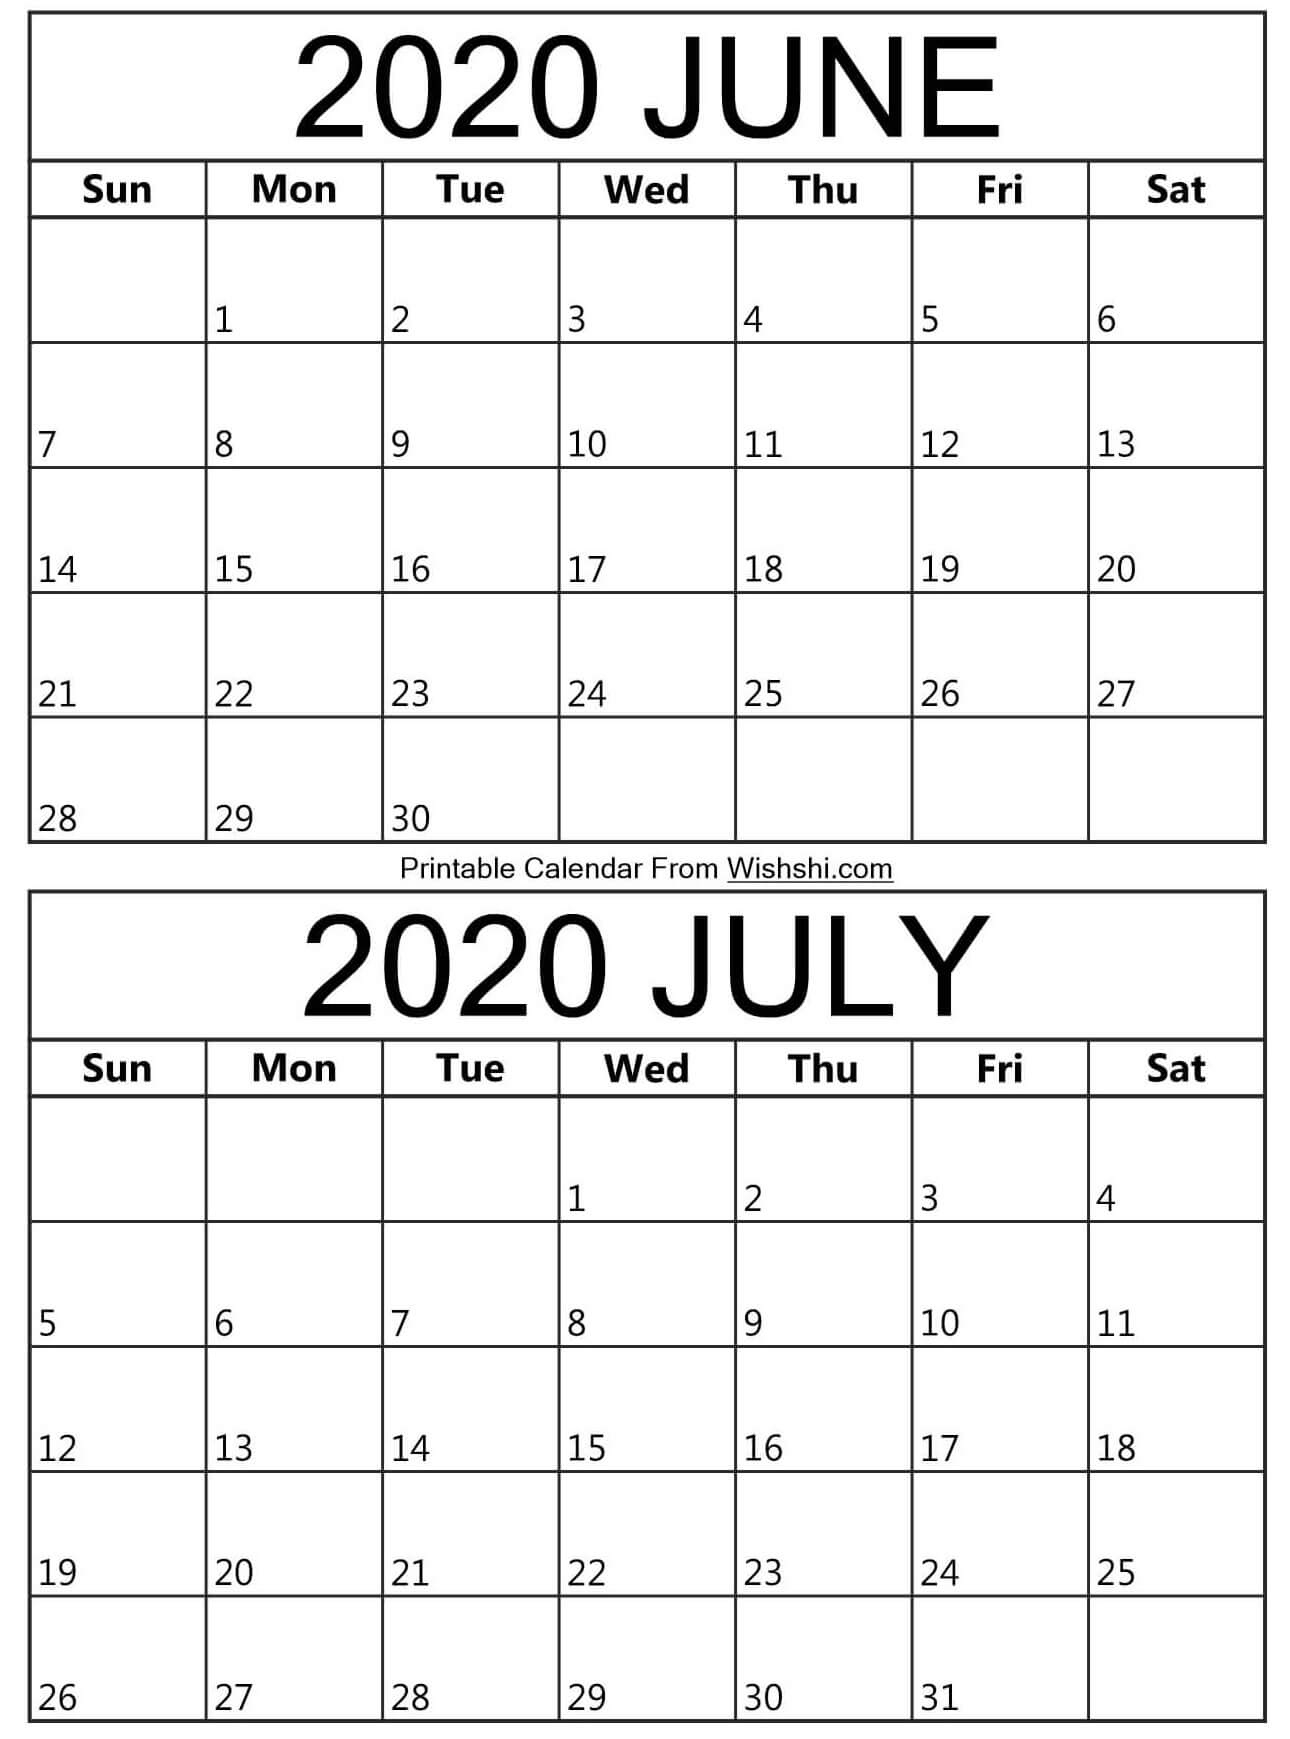 Printable June July Calendar Free Printable Calendar July 2020 To June 2021